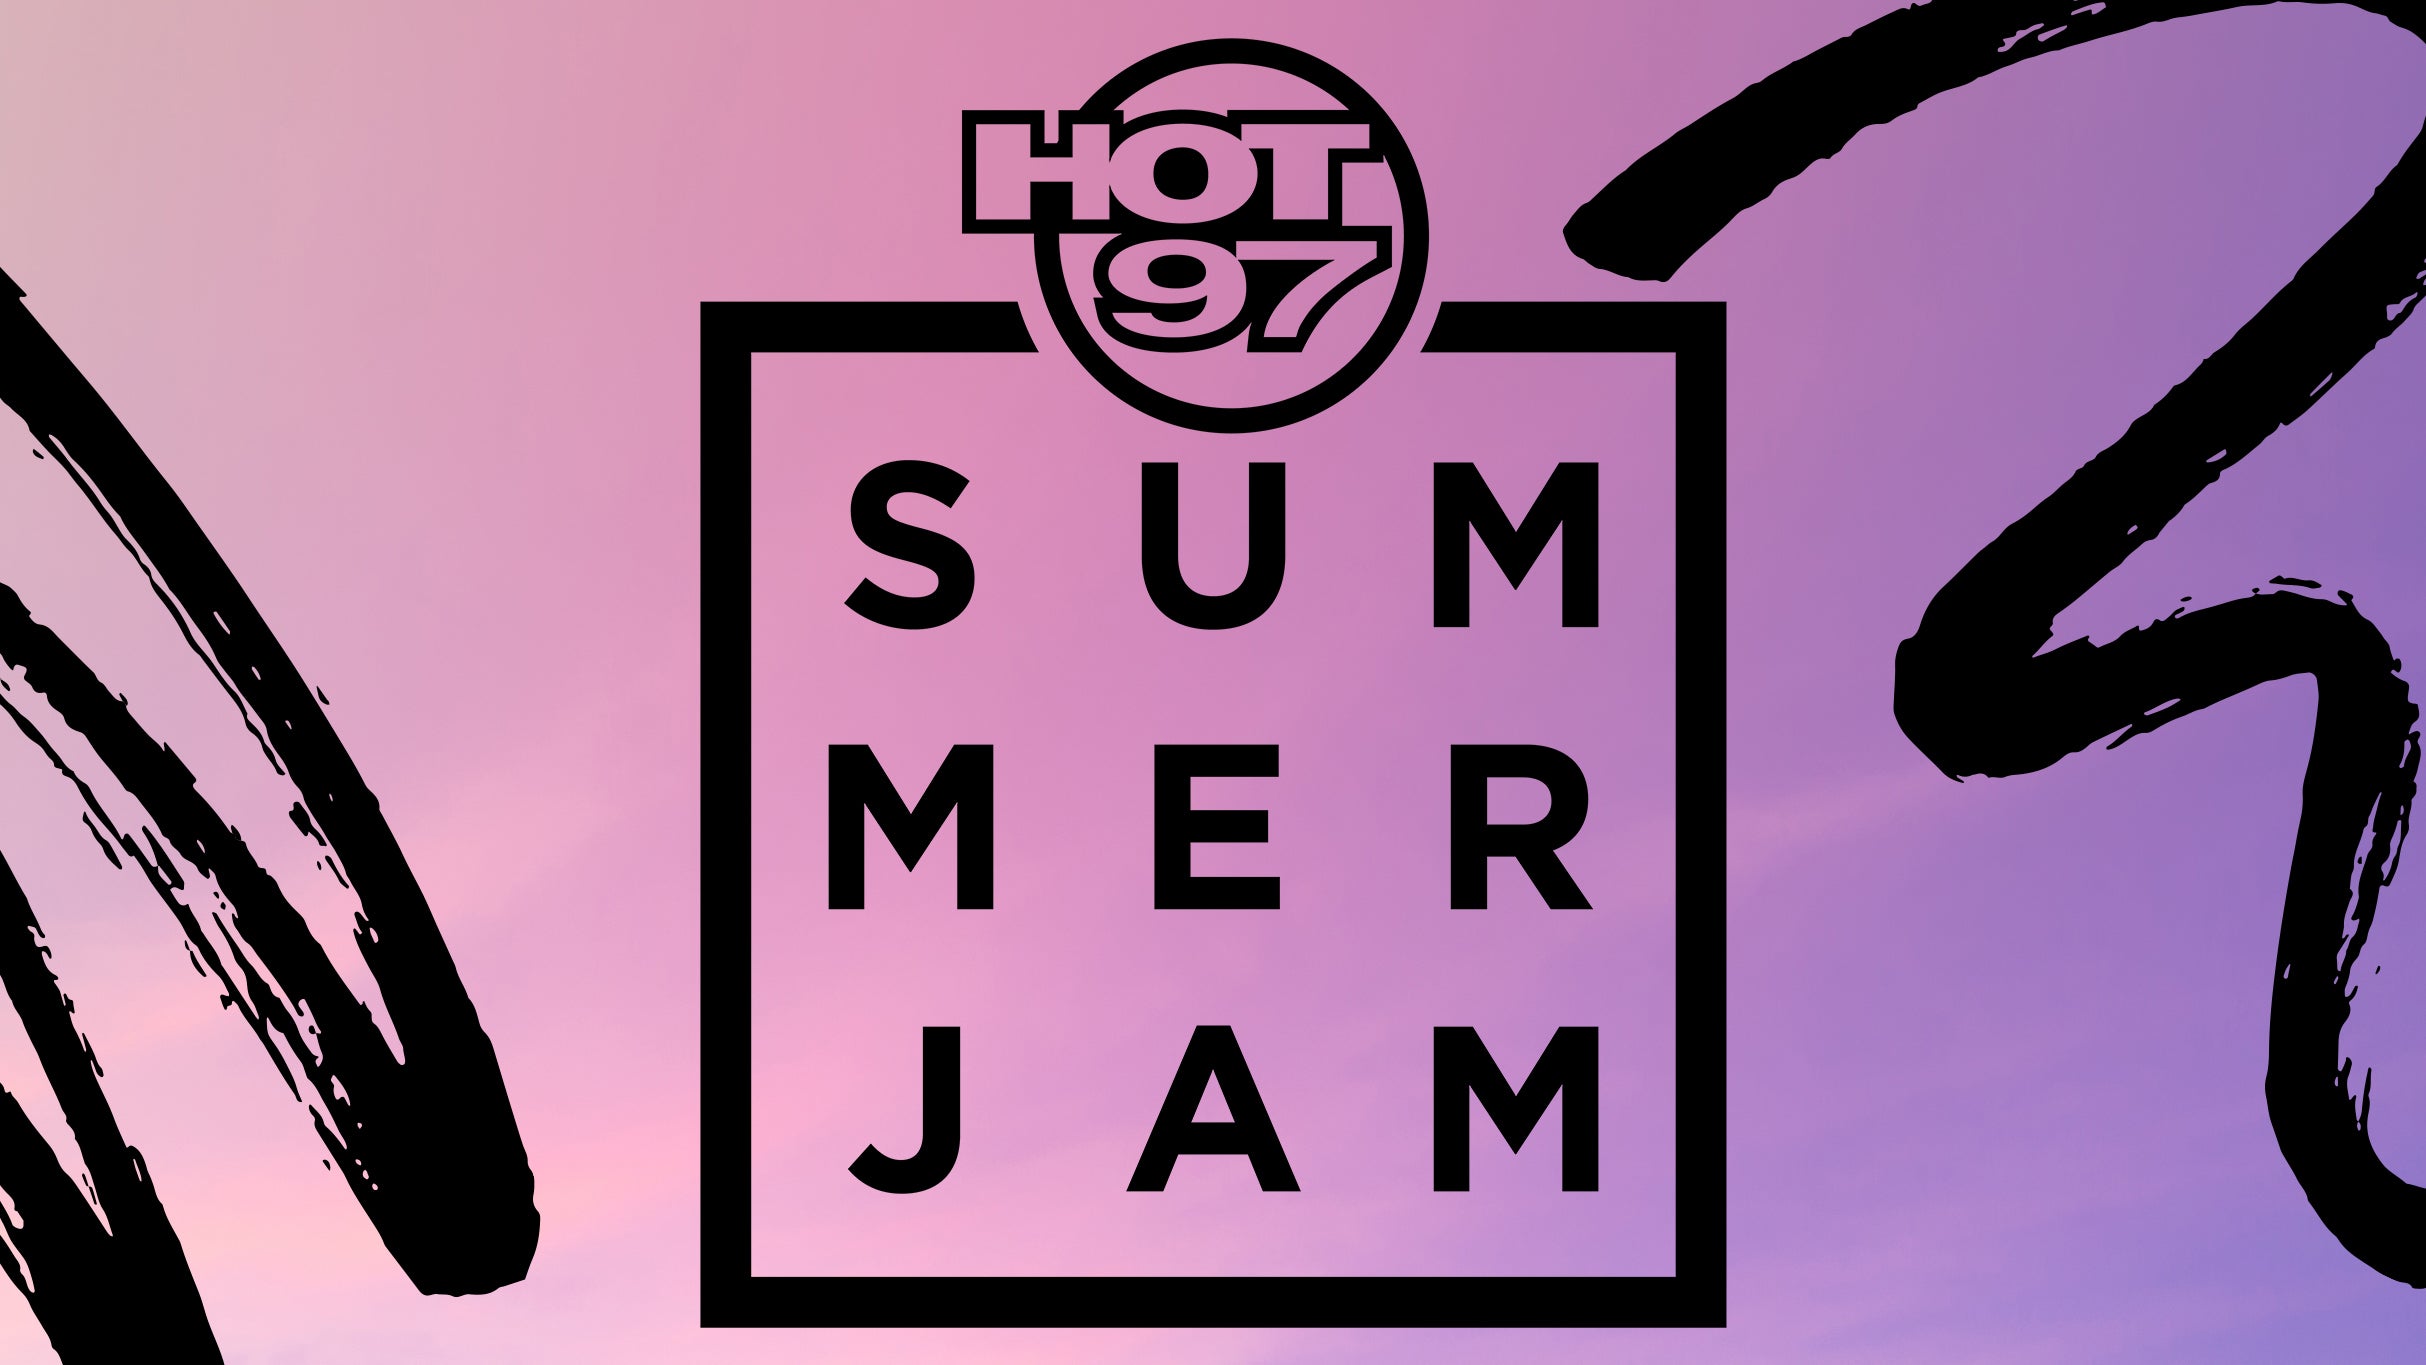 HOT 97 Summer Jam presales in Belmont Park